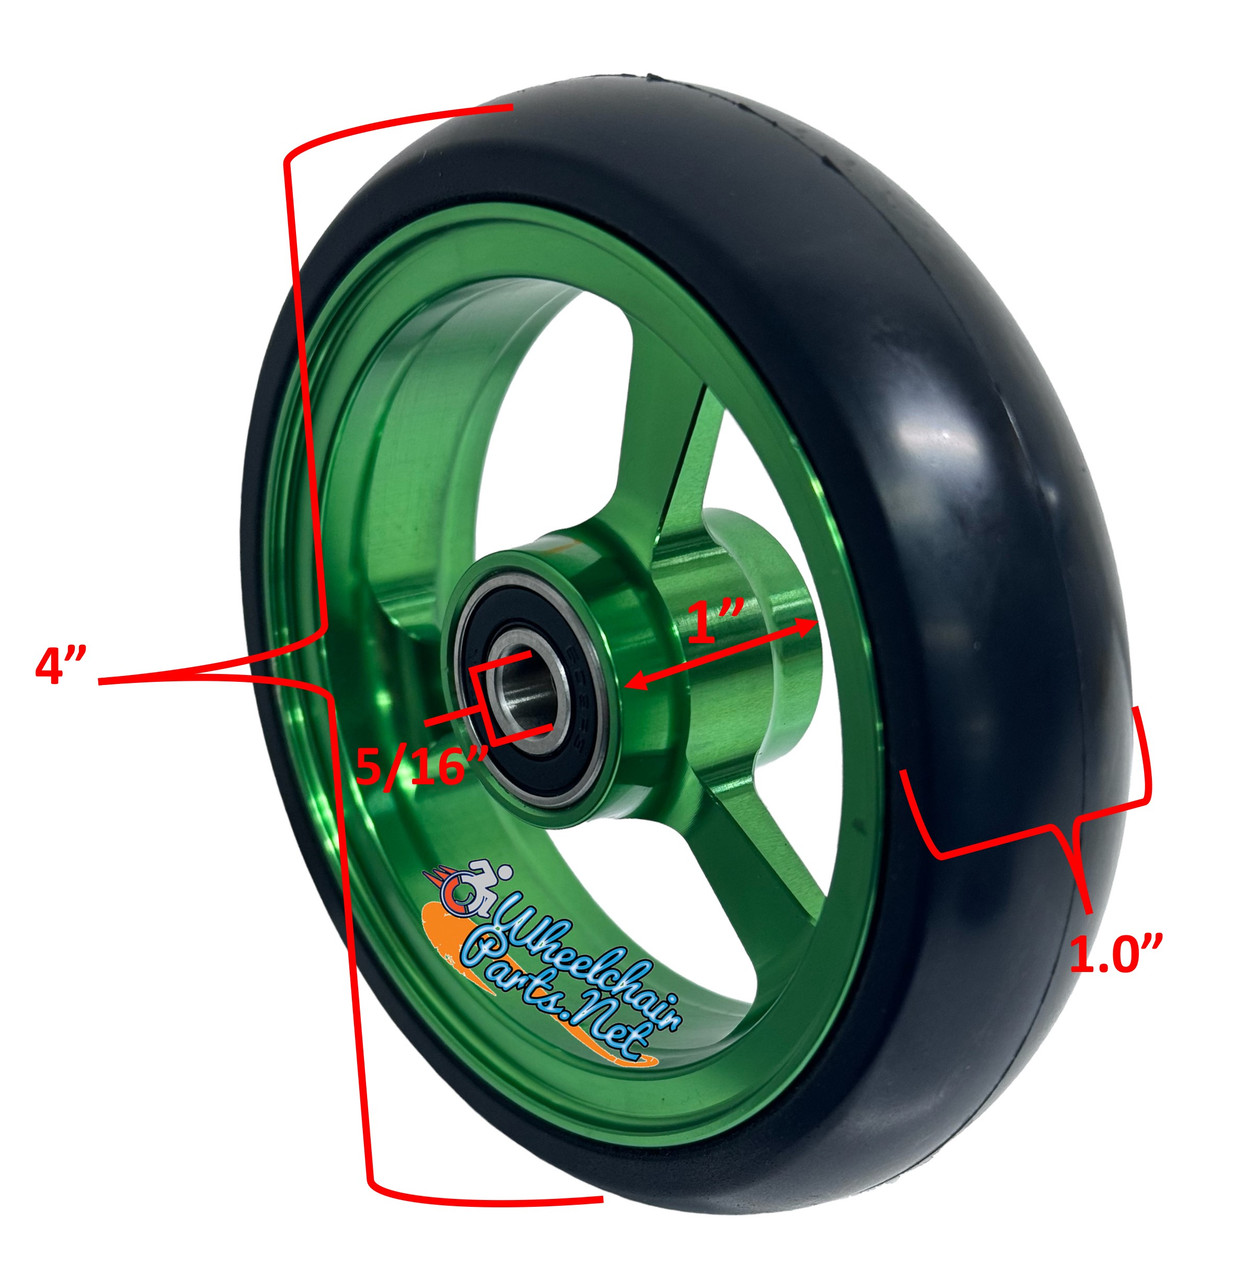 4" X 1" Aluminum 3 Spoke Wheel, Green Rim / Soft Urethane Tire with 5/16" bearings.